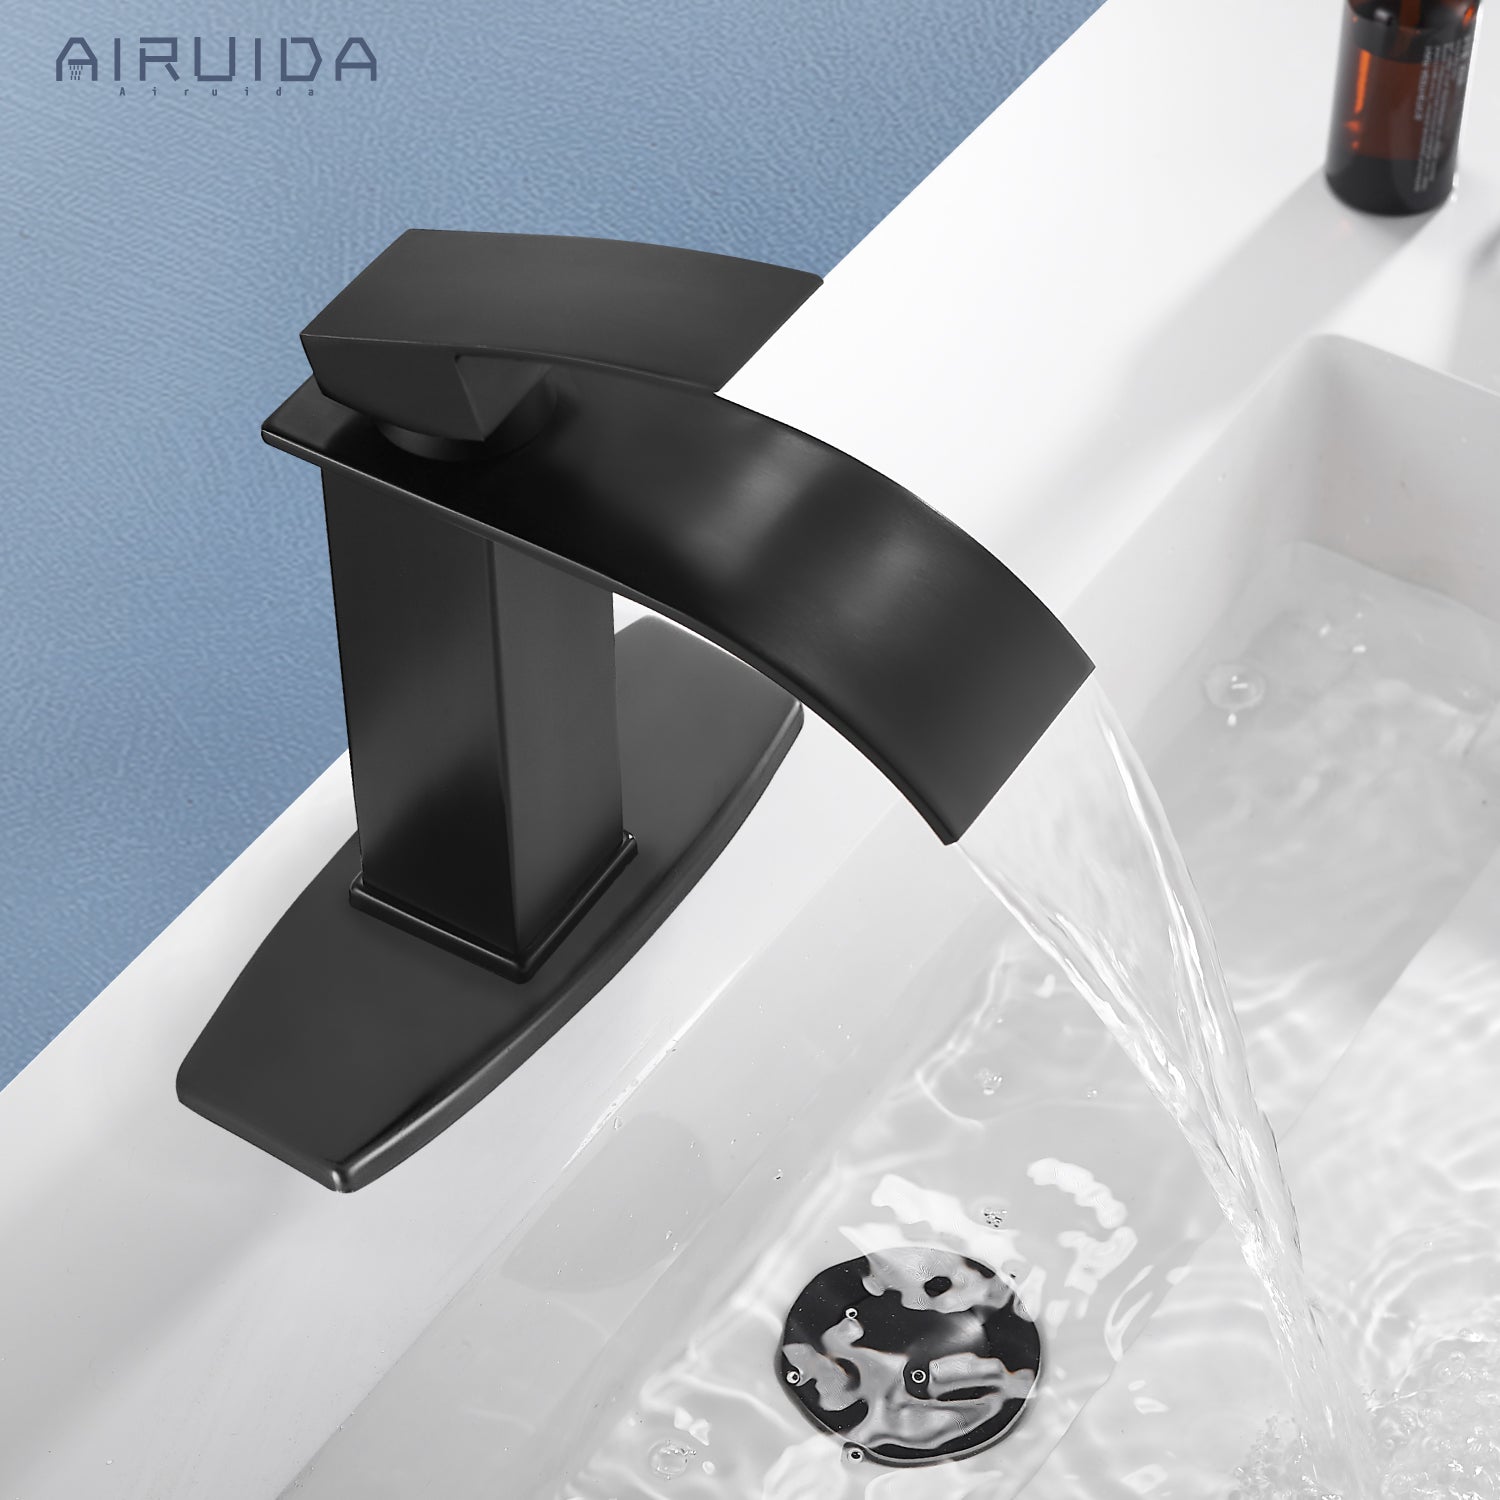 Airuida Waterfall Spout Bathroom Faucet, Rv Lavatory Vessel Faucet, Single Handle One Hole 1 or 3 Hole with Deck Plate, Bathroom Sink Faucet with Pop-up Drain